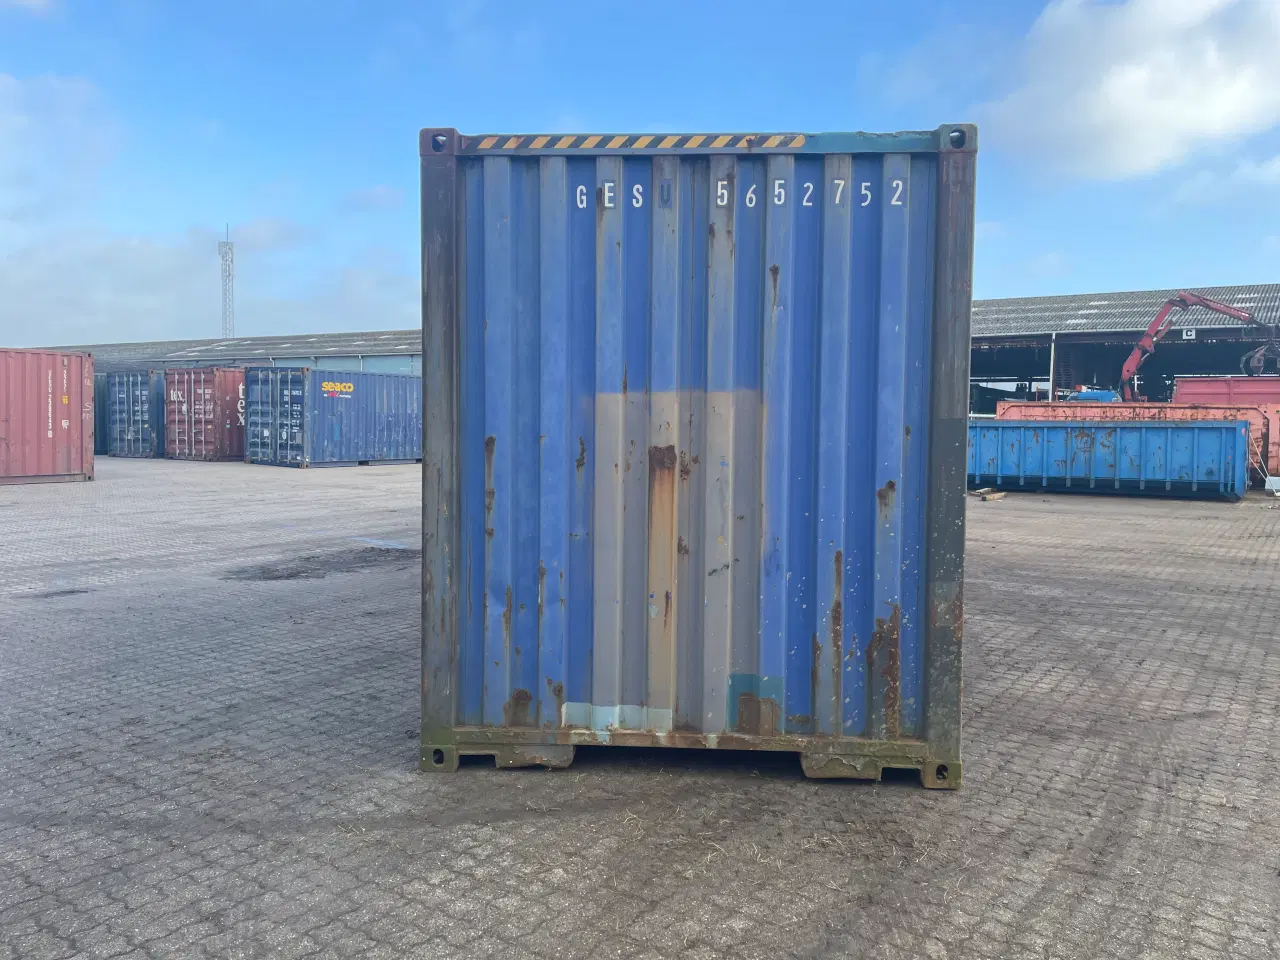 Billede 4 - 40 fods HC Container - ID: GSEU 565275-2 